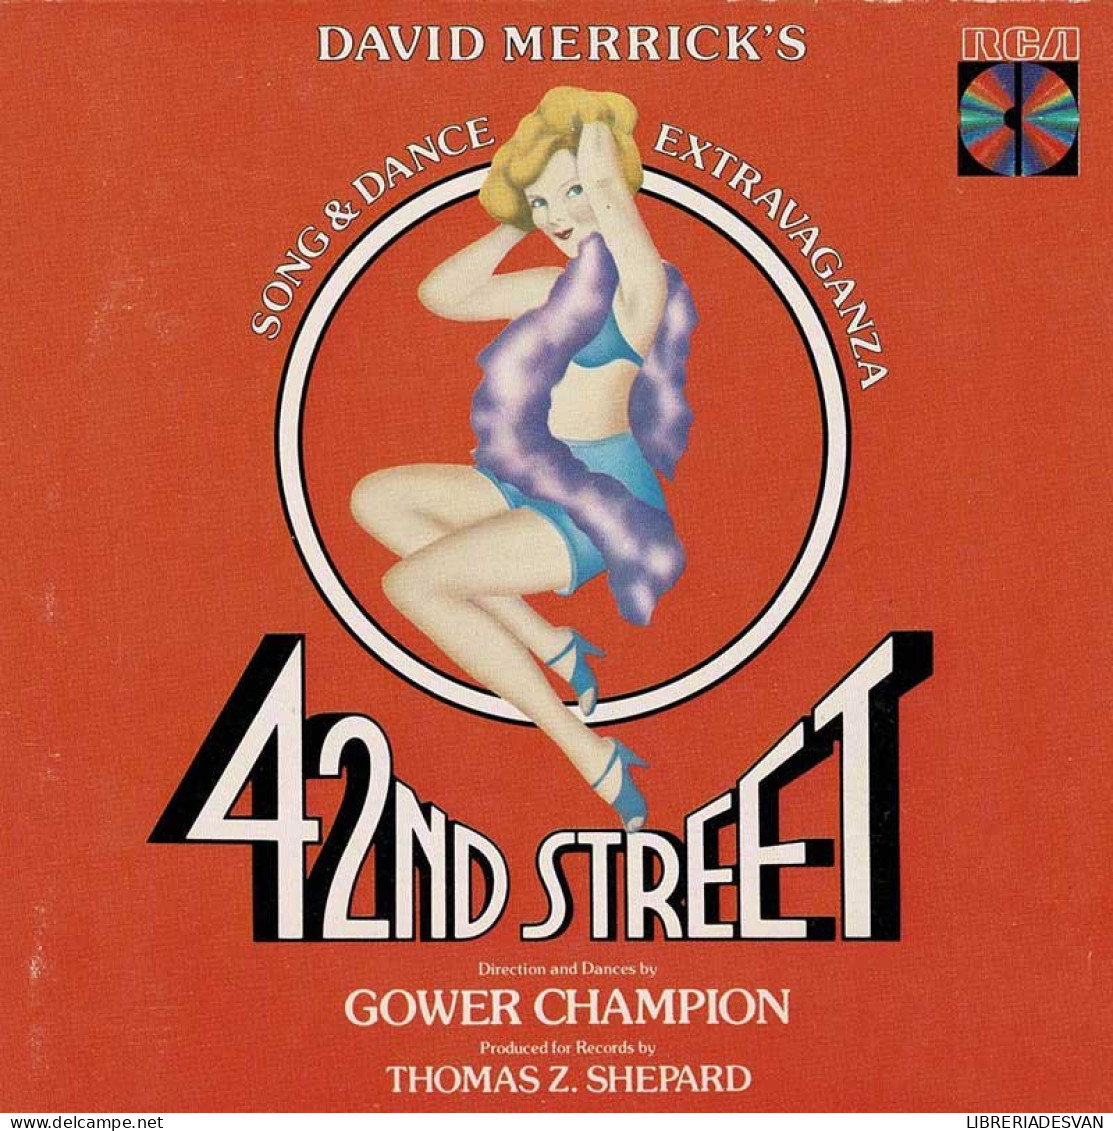 David Merrick, Thomas Z. Shepard - 42nd Street. CD - Soundtracks, Film Music